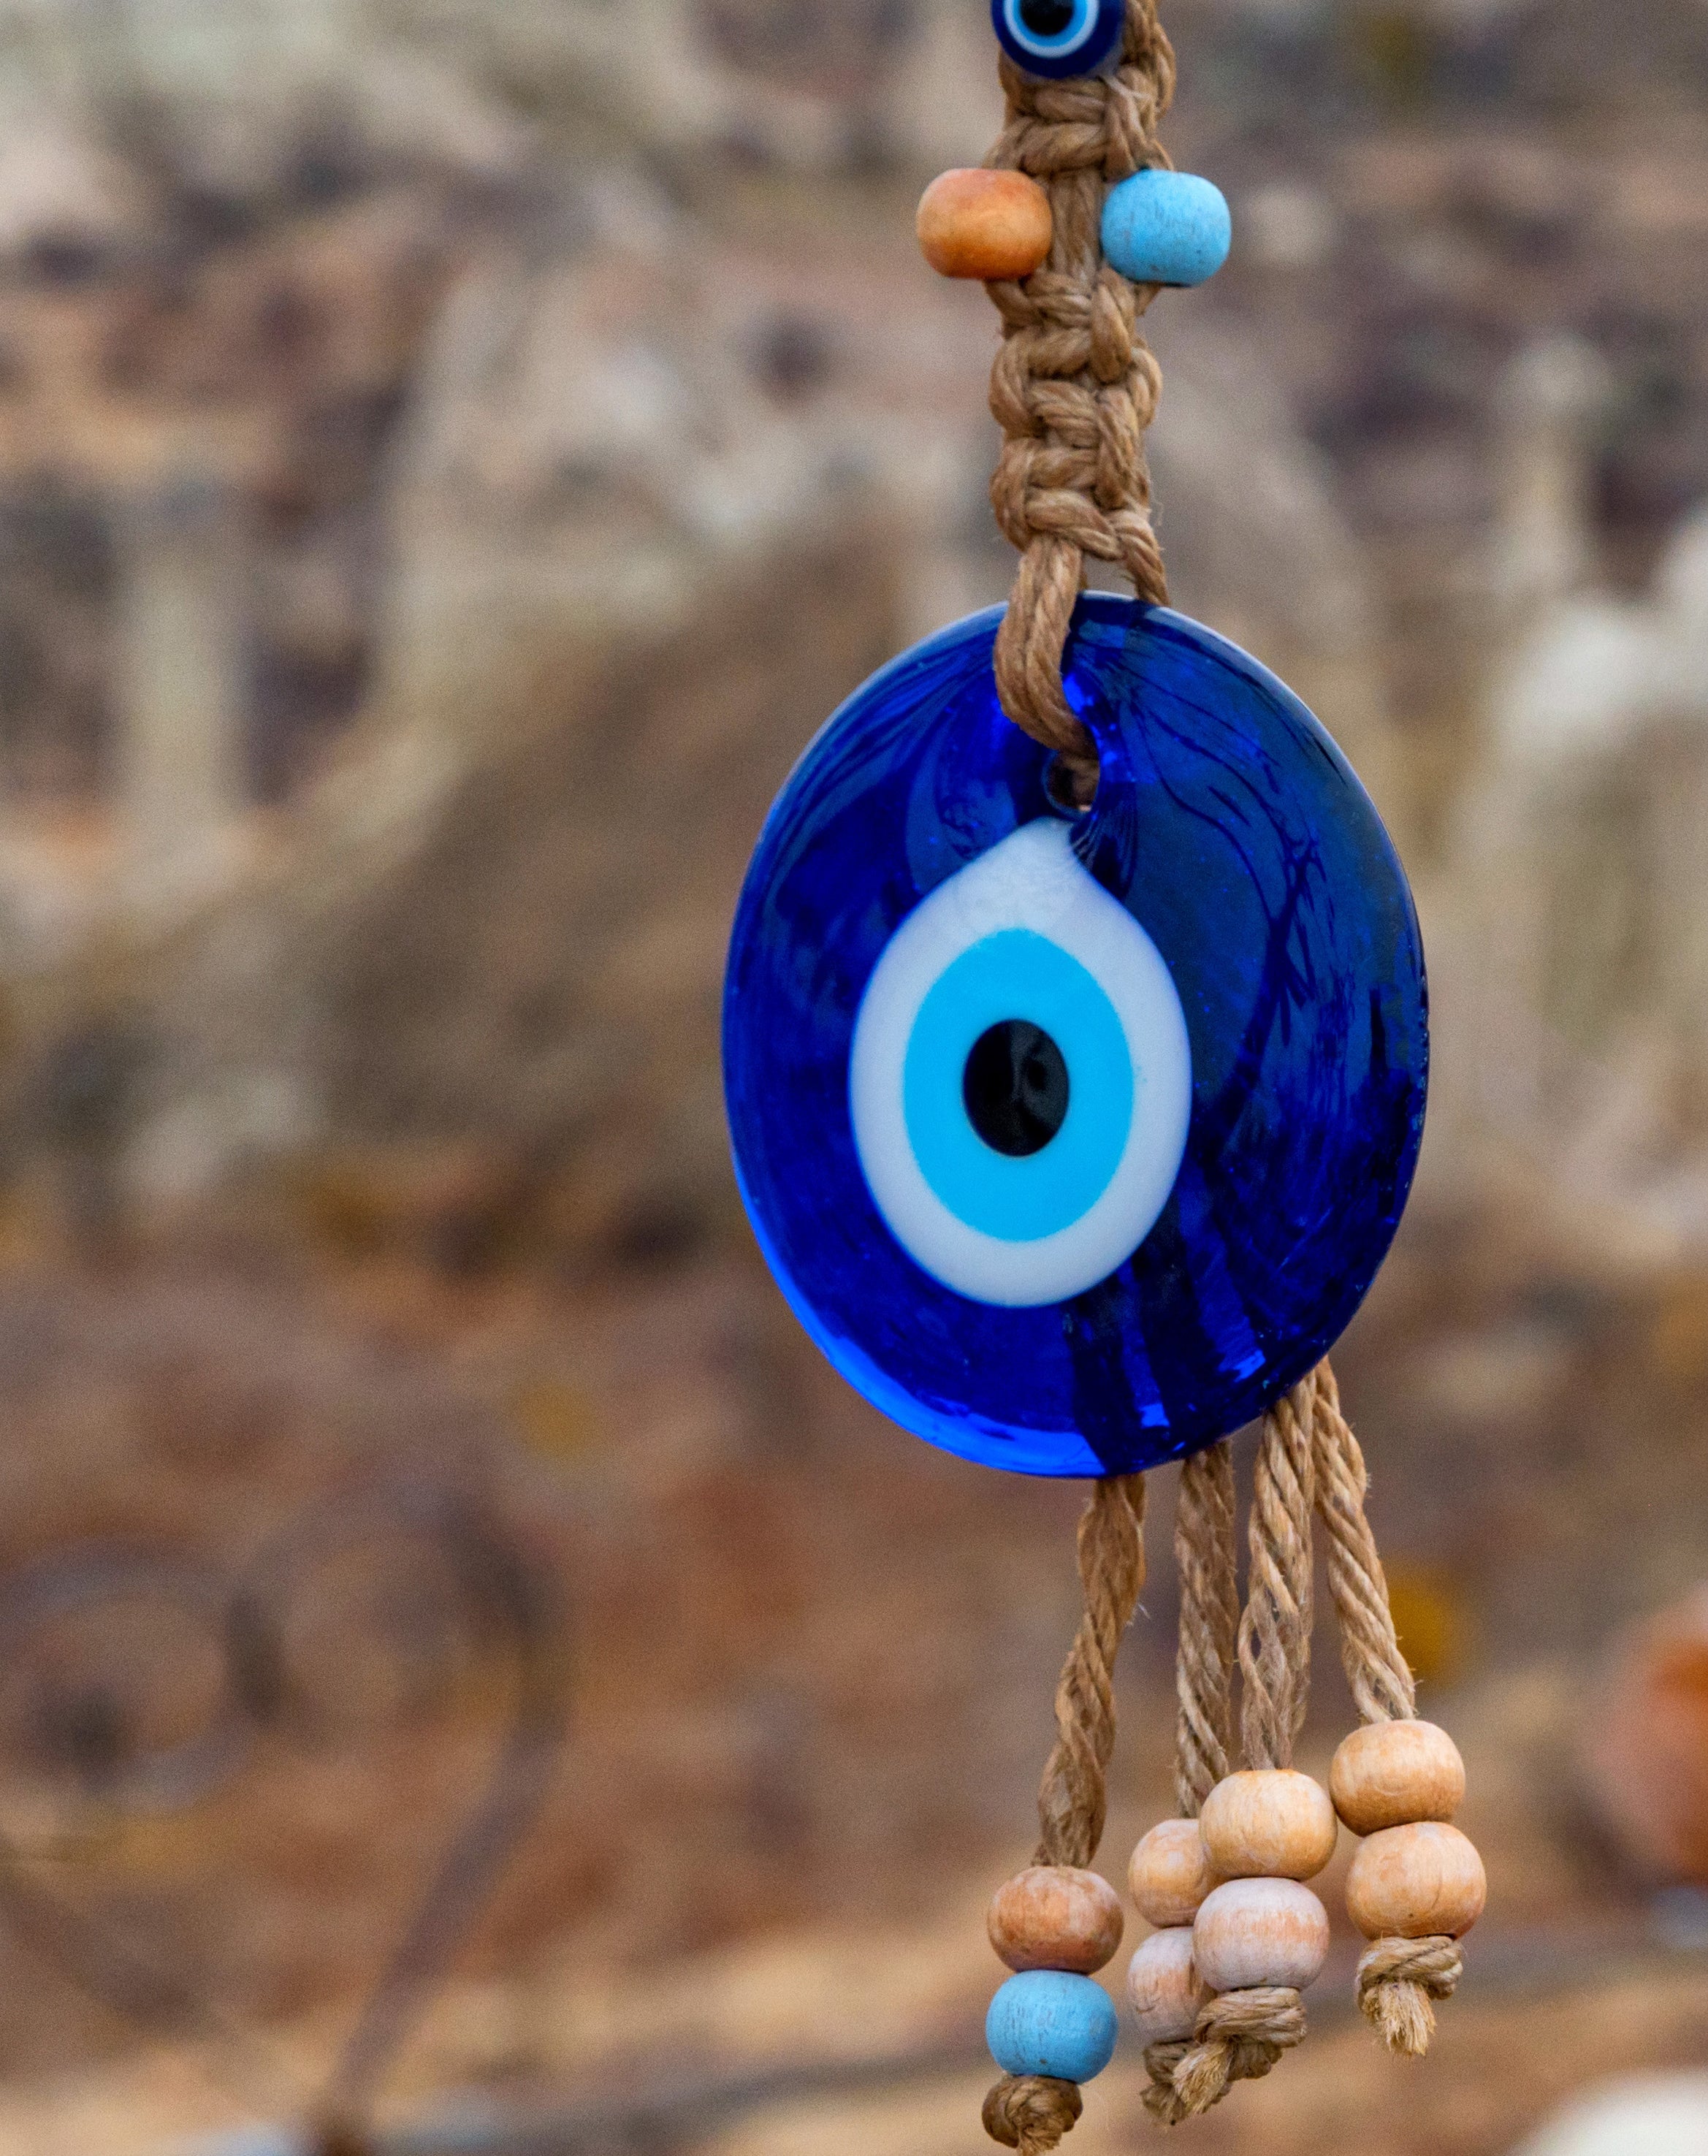 Nazar Evil Eye Ward Protection Symbol Charm Curse Magic Multi